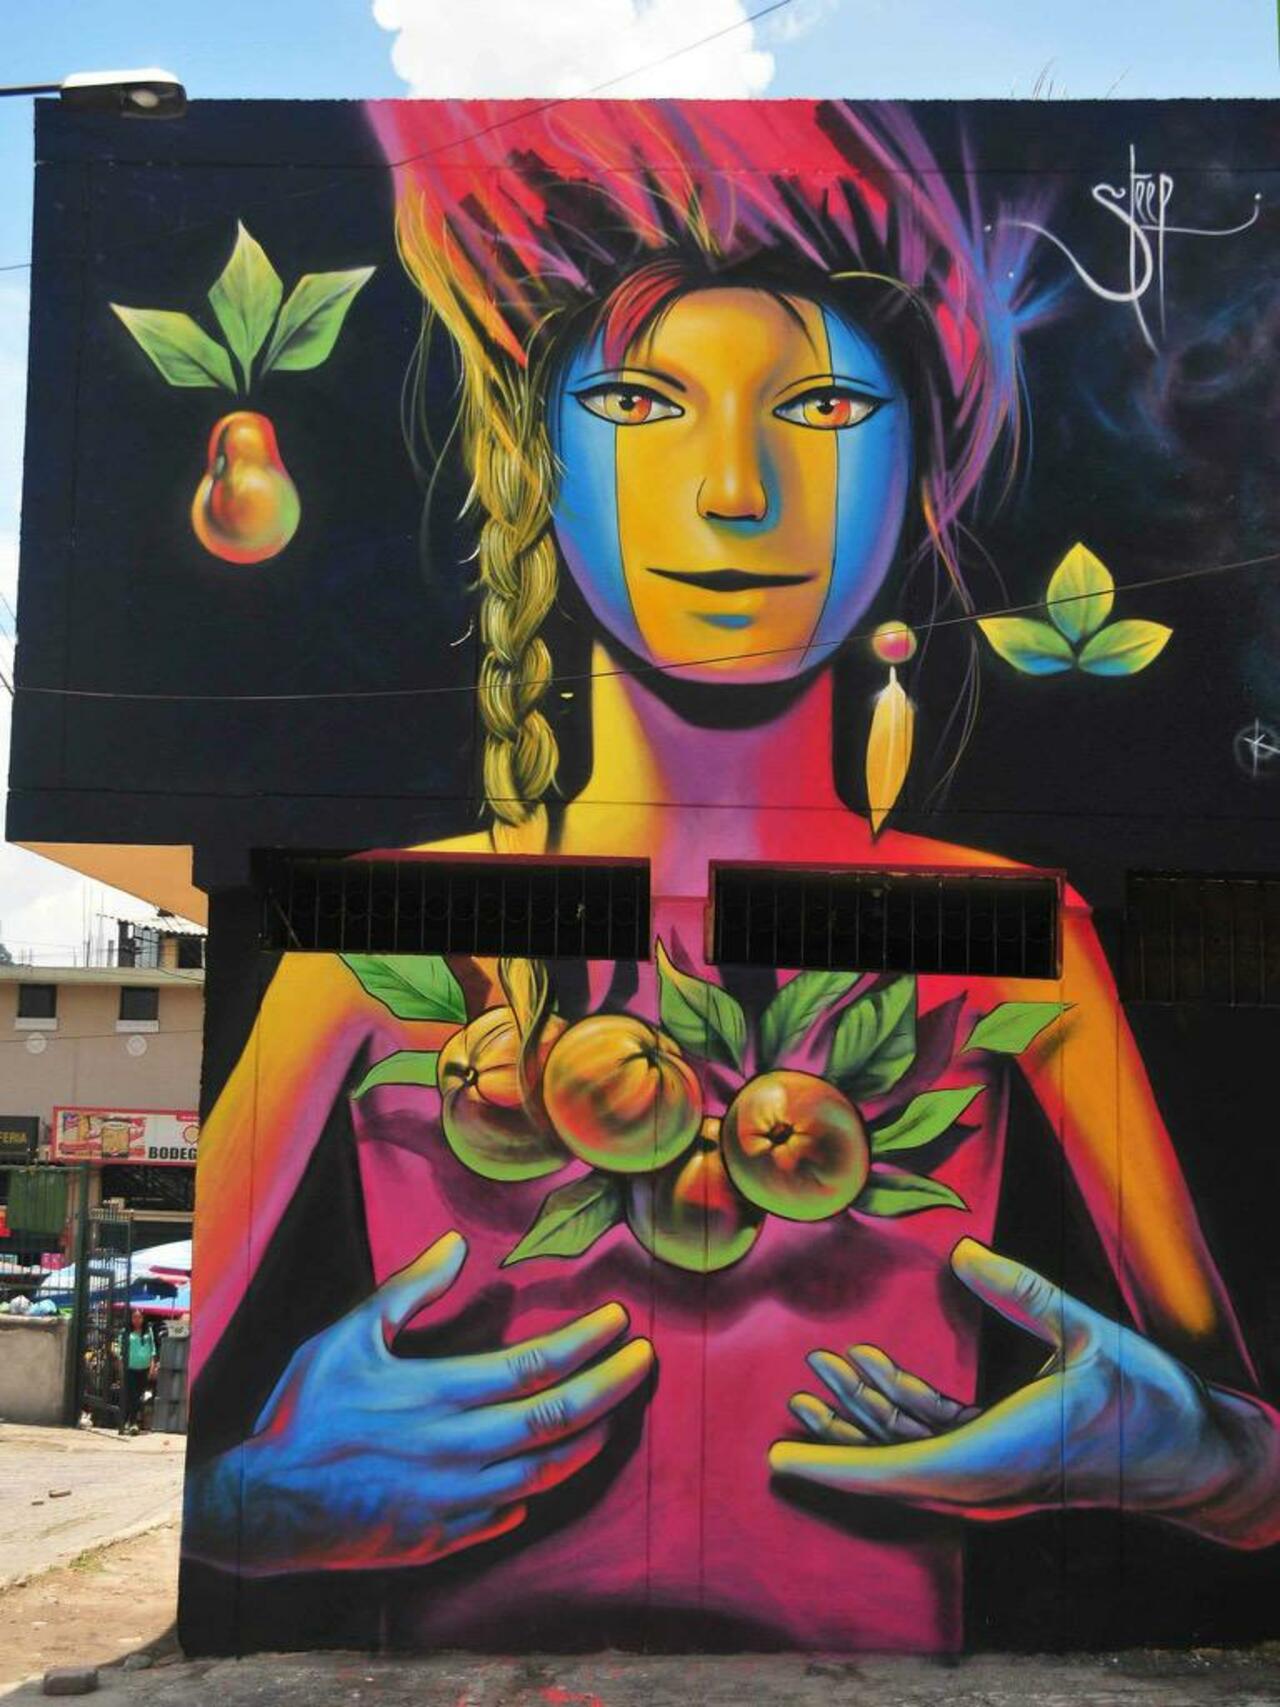 Cool! Street Art by Steep

#art #graffiti #mural #streetart http://t.co/9pQKcAsjYS MT @GoogleStreetArt